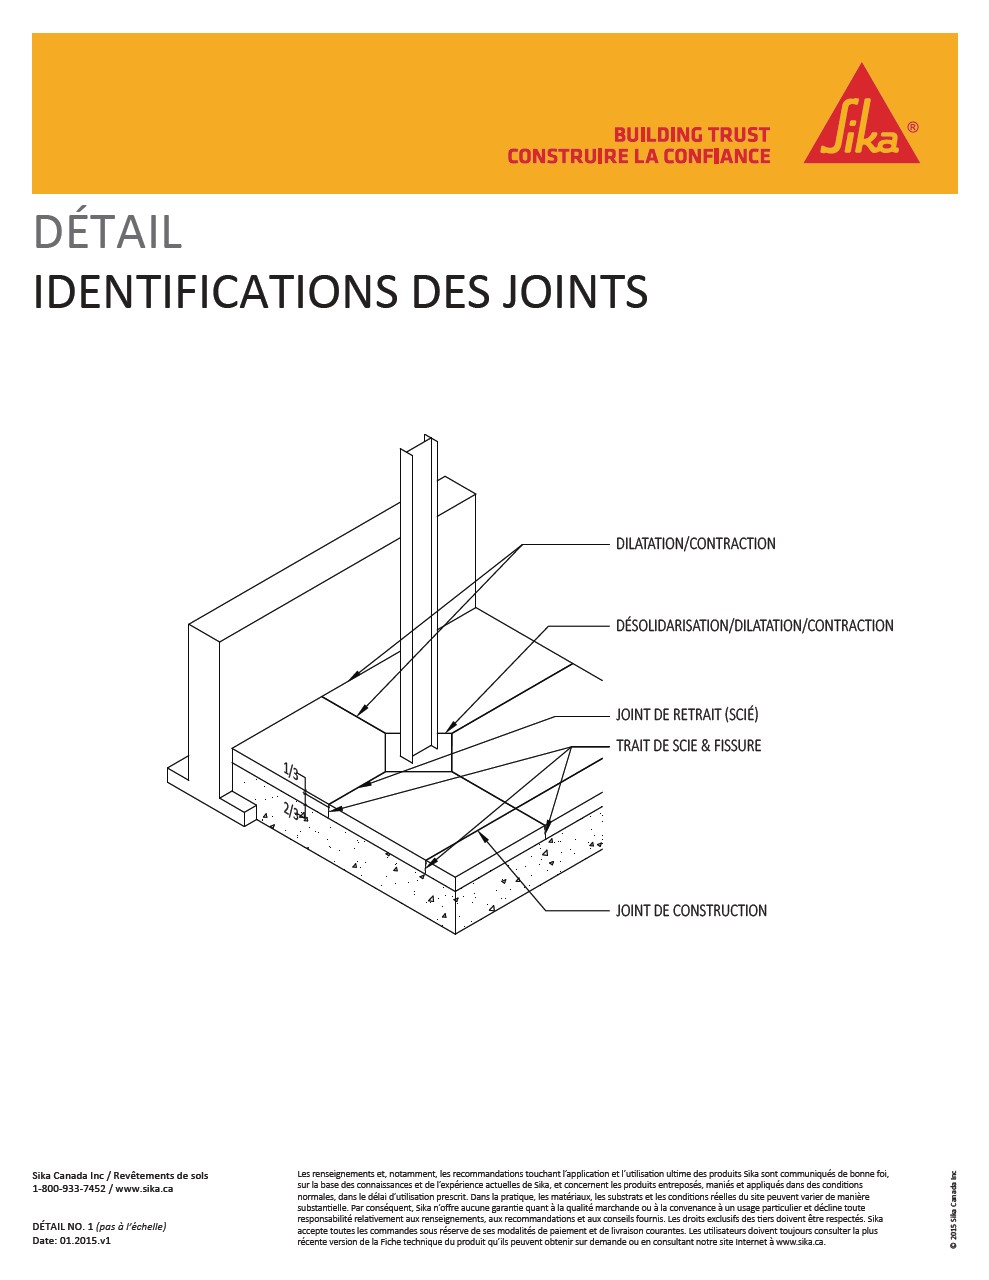 1- Identifications des joints